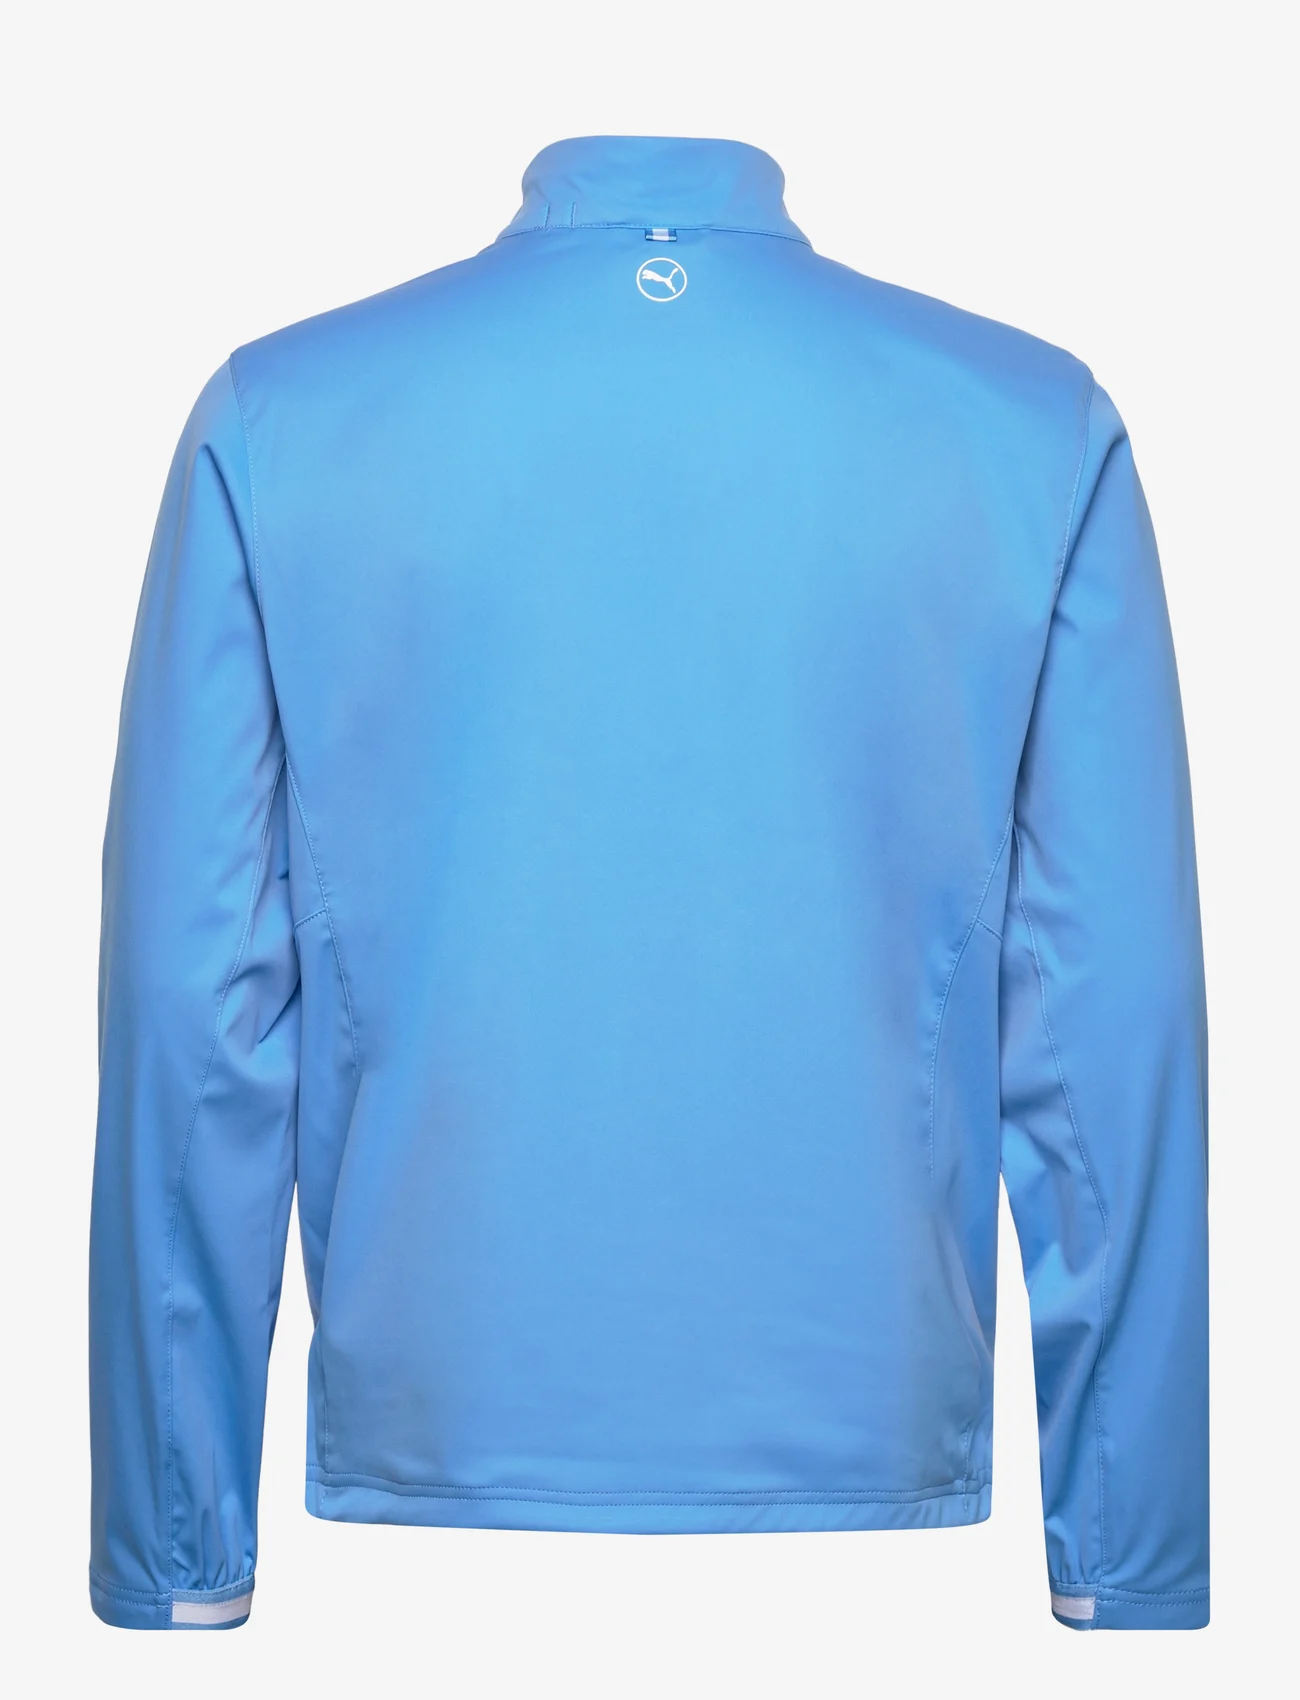 PUMA Golf - Channel Softshell Jacket - golfjassen - regal blue-white glow - 1